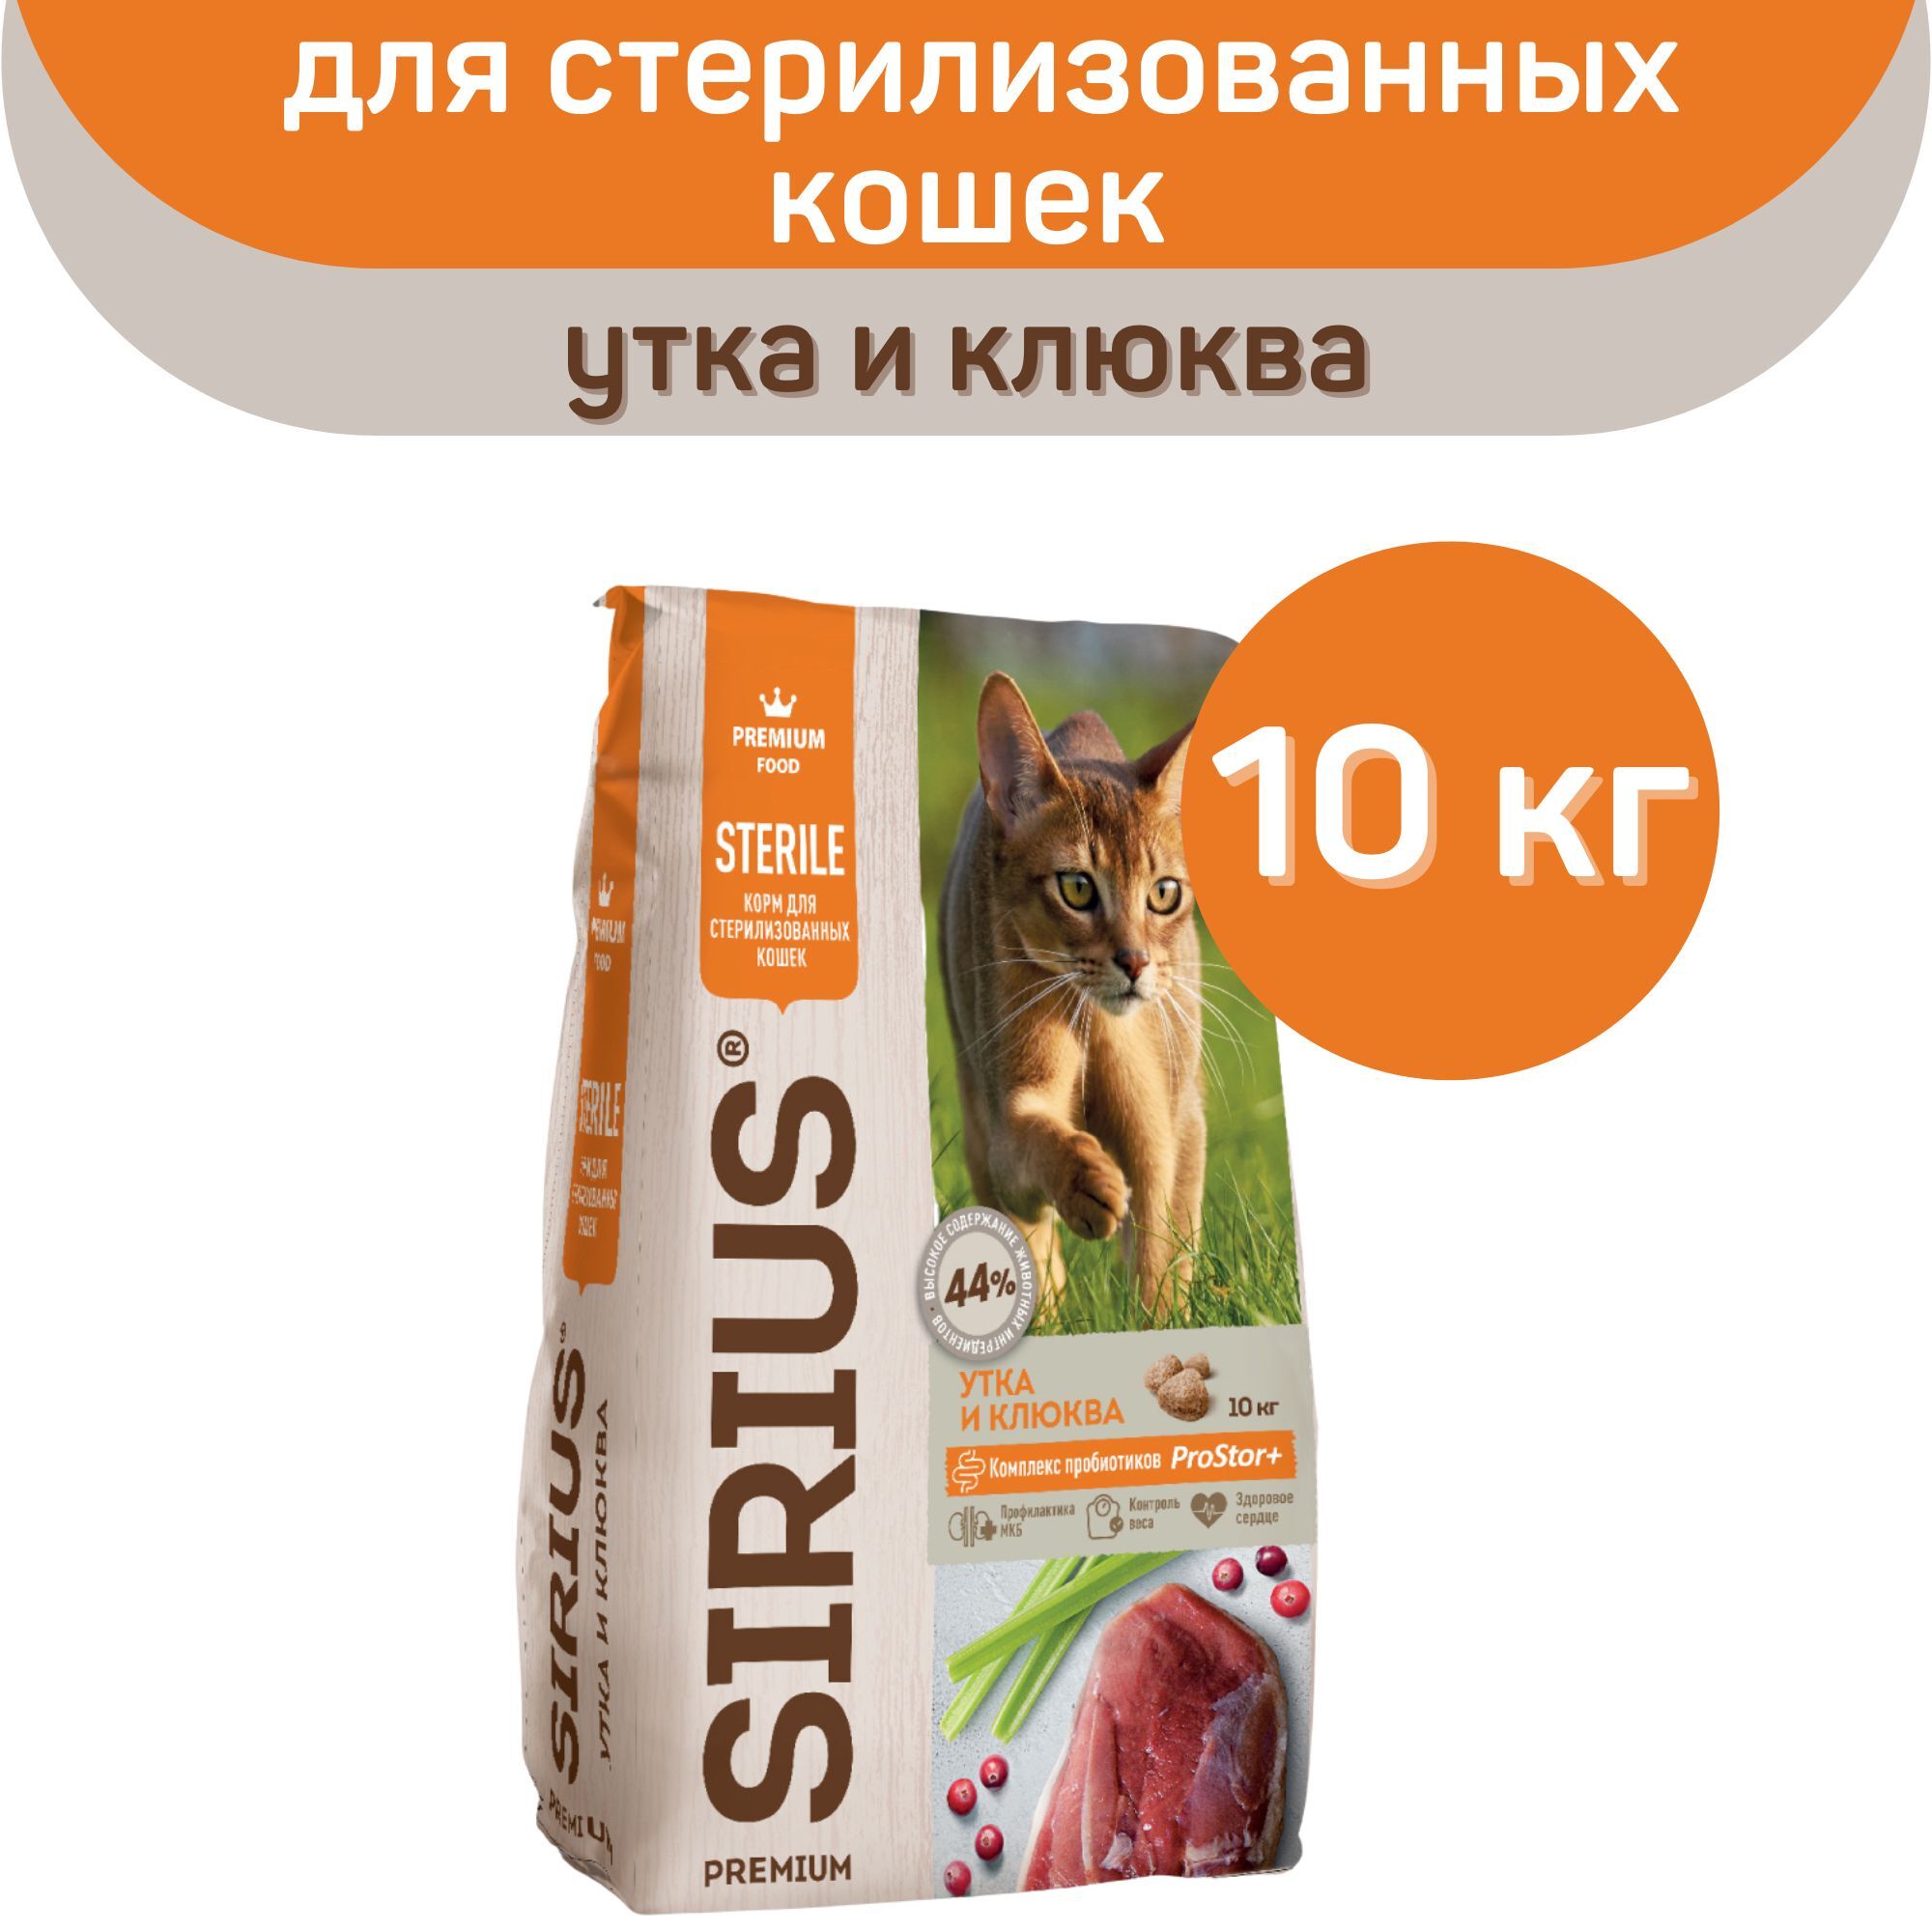 Сириус корм для кошек 10 кг купить